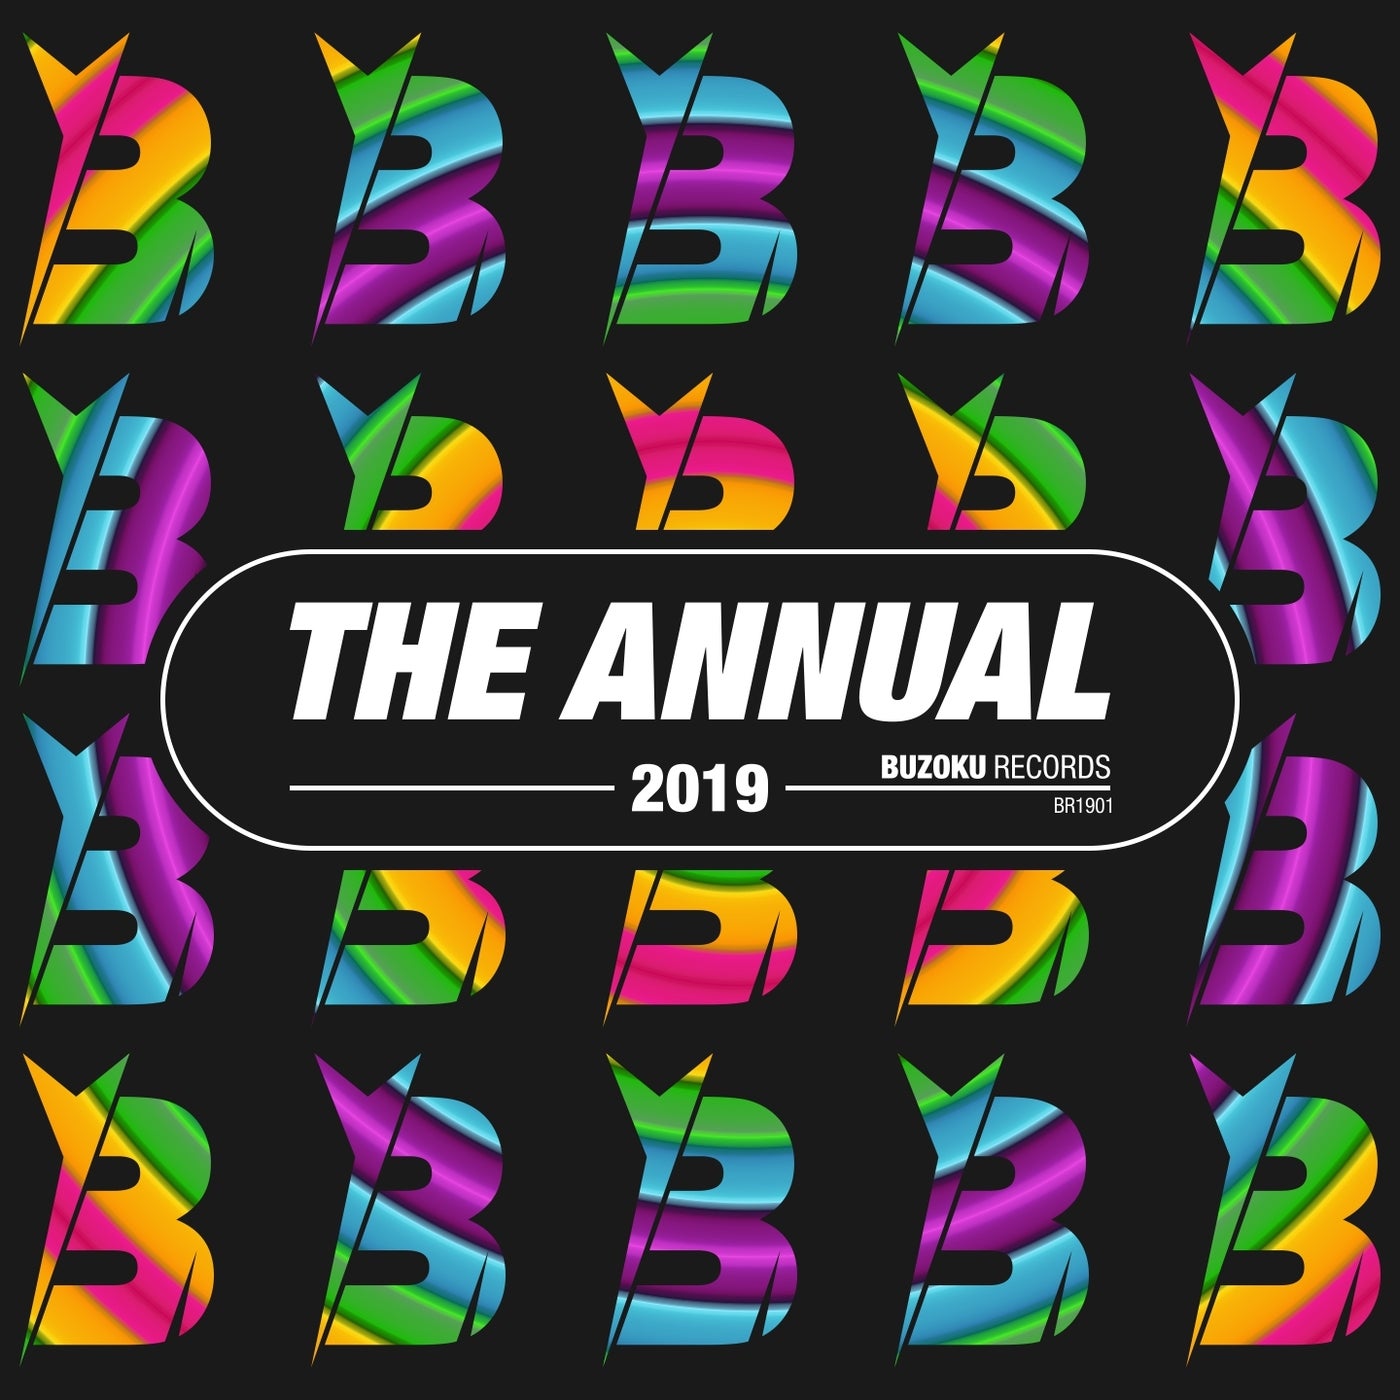 The Annual 2019: Buzoku Records